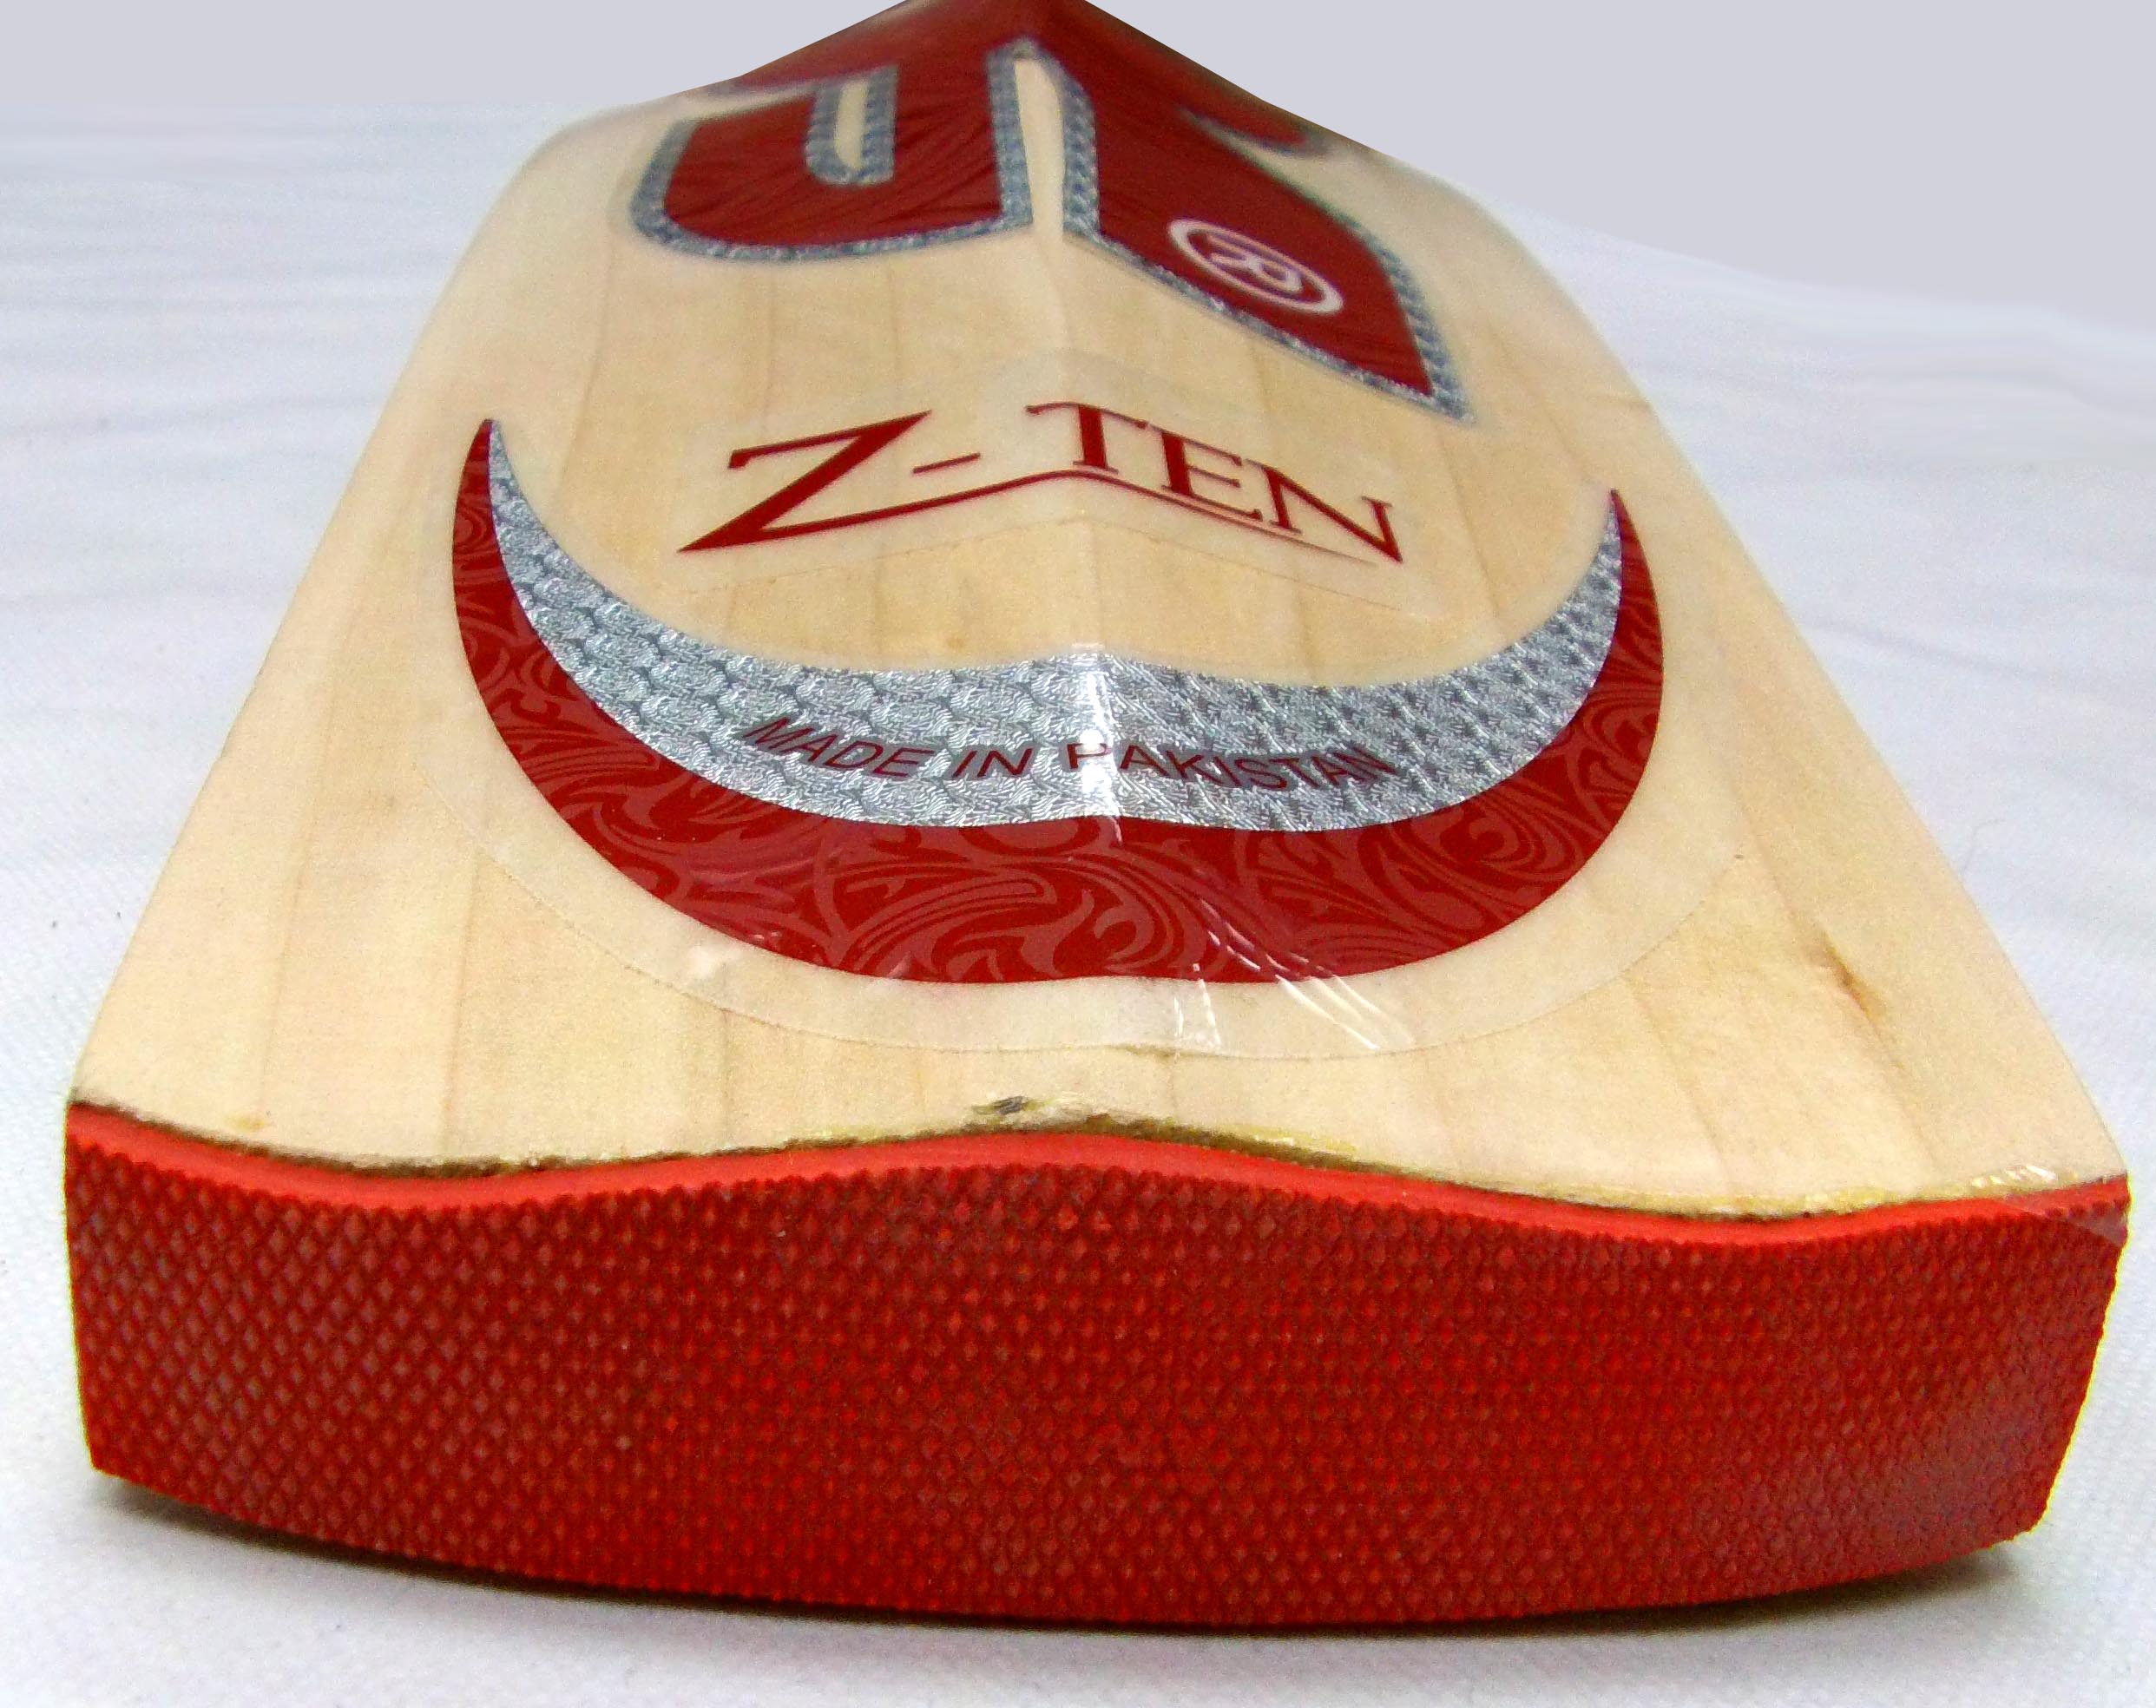 Mids Z Ten Grade 1 English Willow Cricket Bat SH RRP 350.00Sale 249.99  Free bag